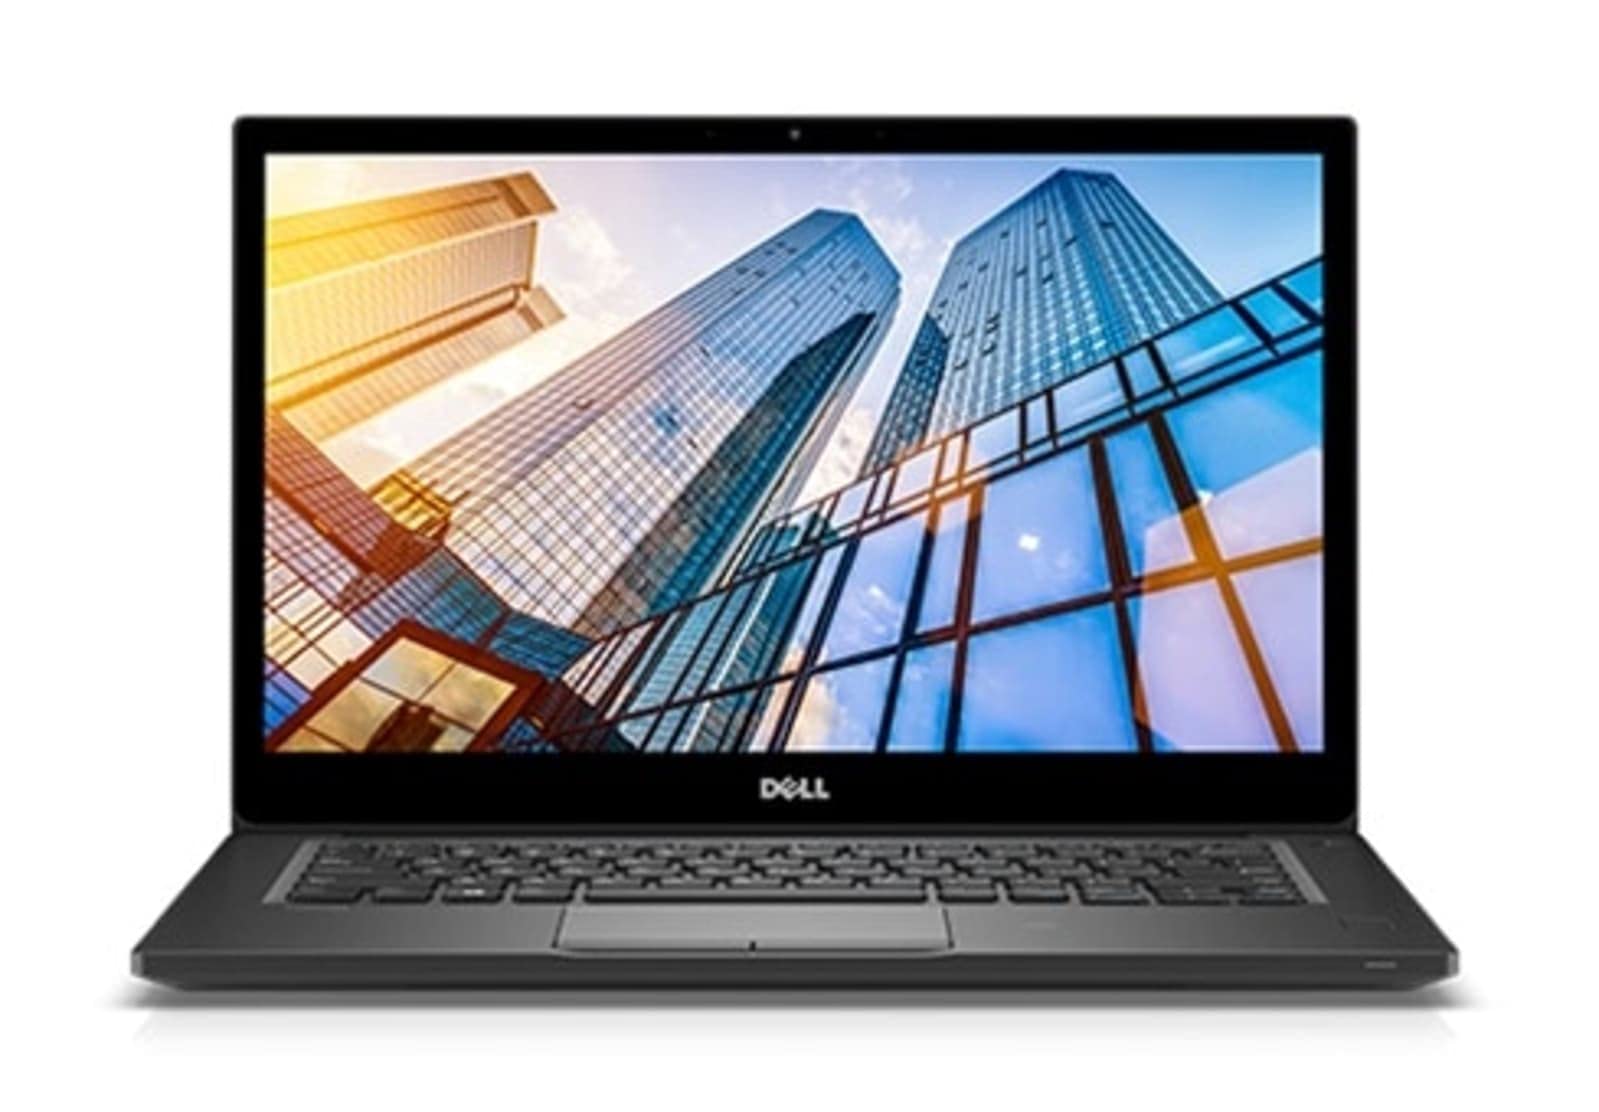 Dell Latitude 7490 Laptop 14 Intel Core i7 7th Gen i7-7600U Core 512GB SSD 8GB 1920x1080 FHD Windows 10 Pro (Renewed)